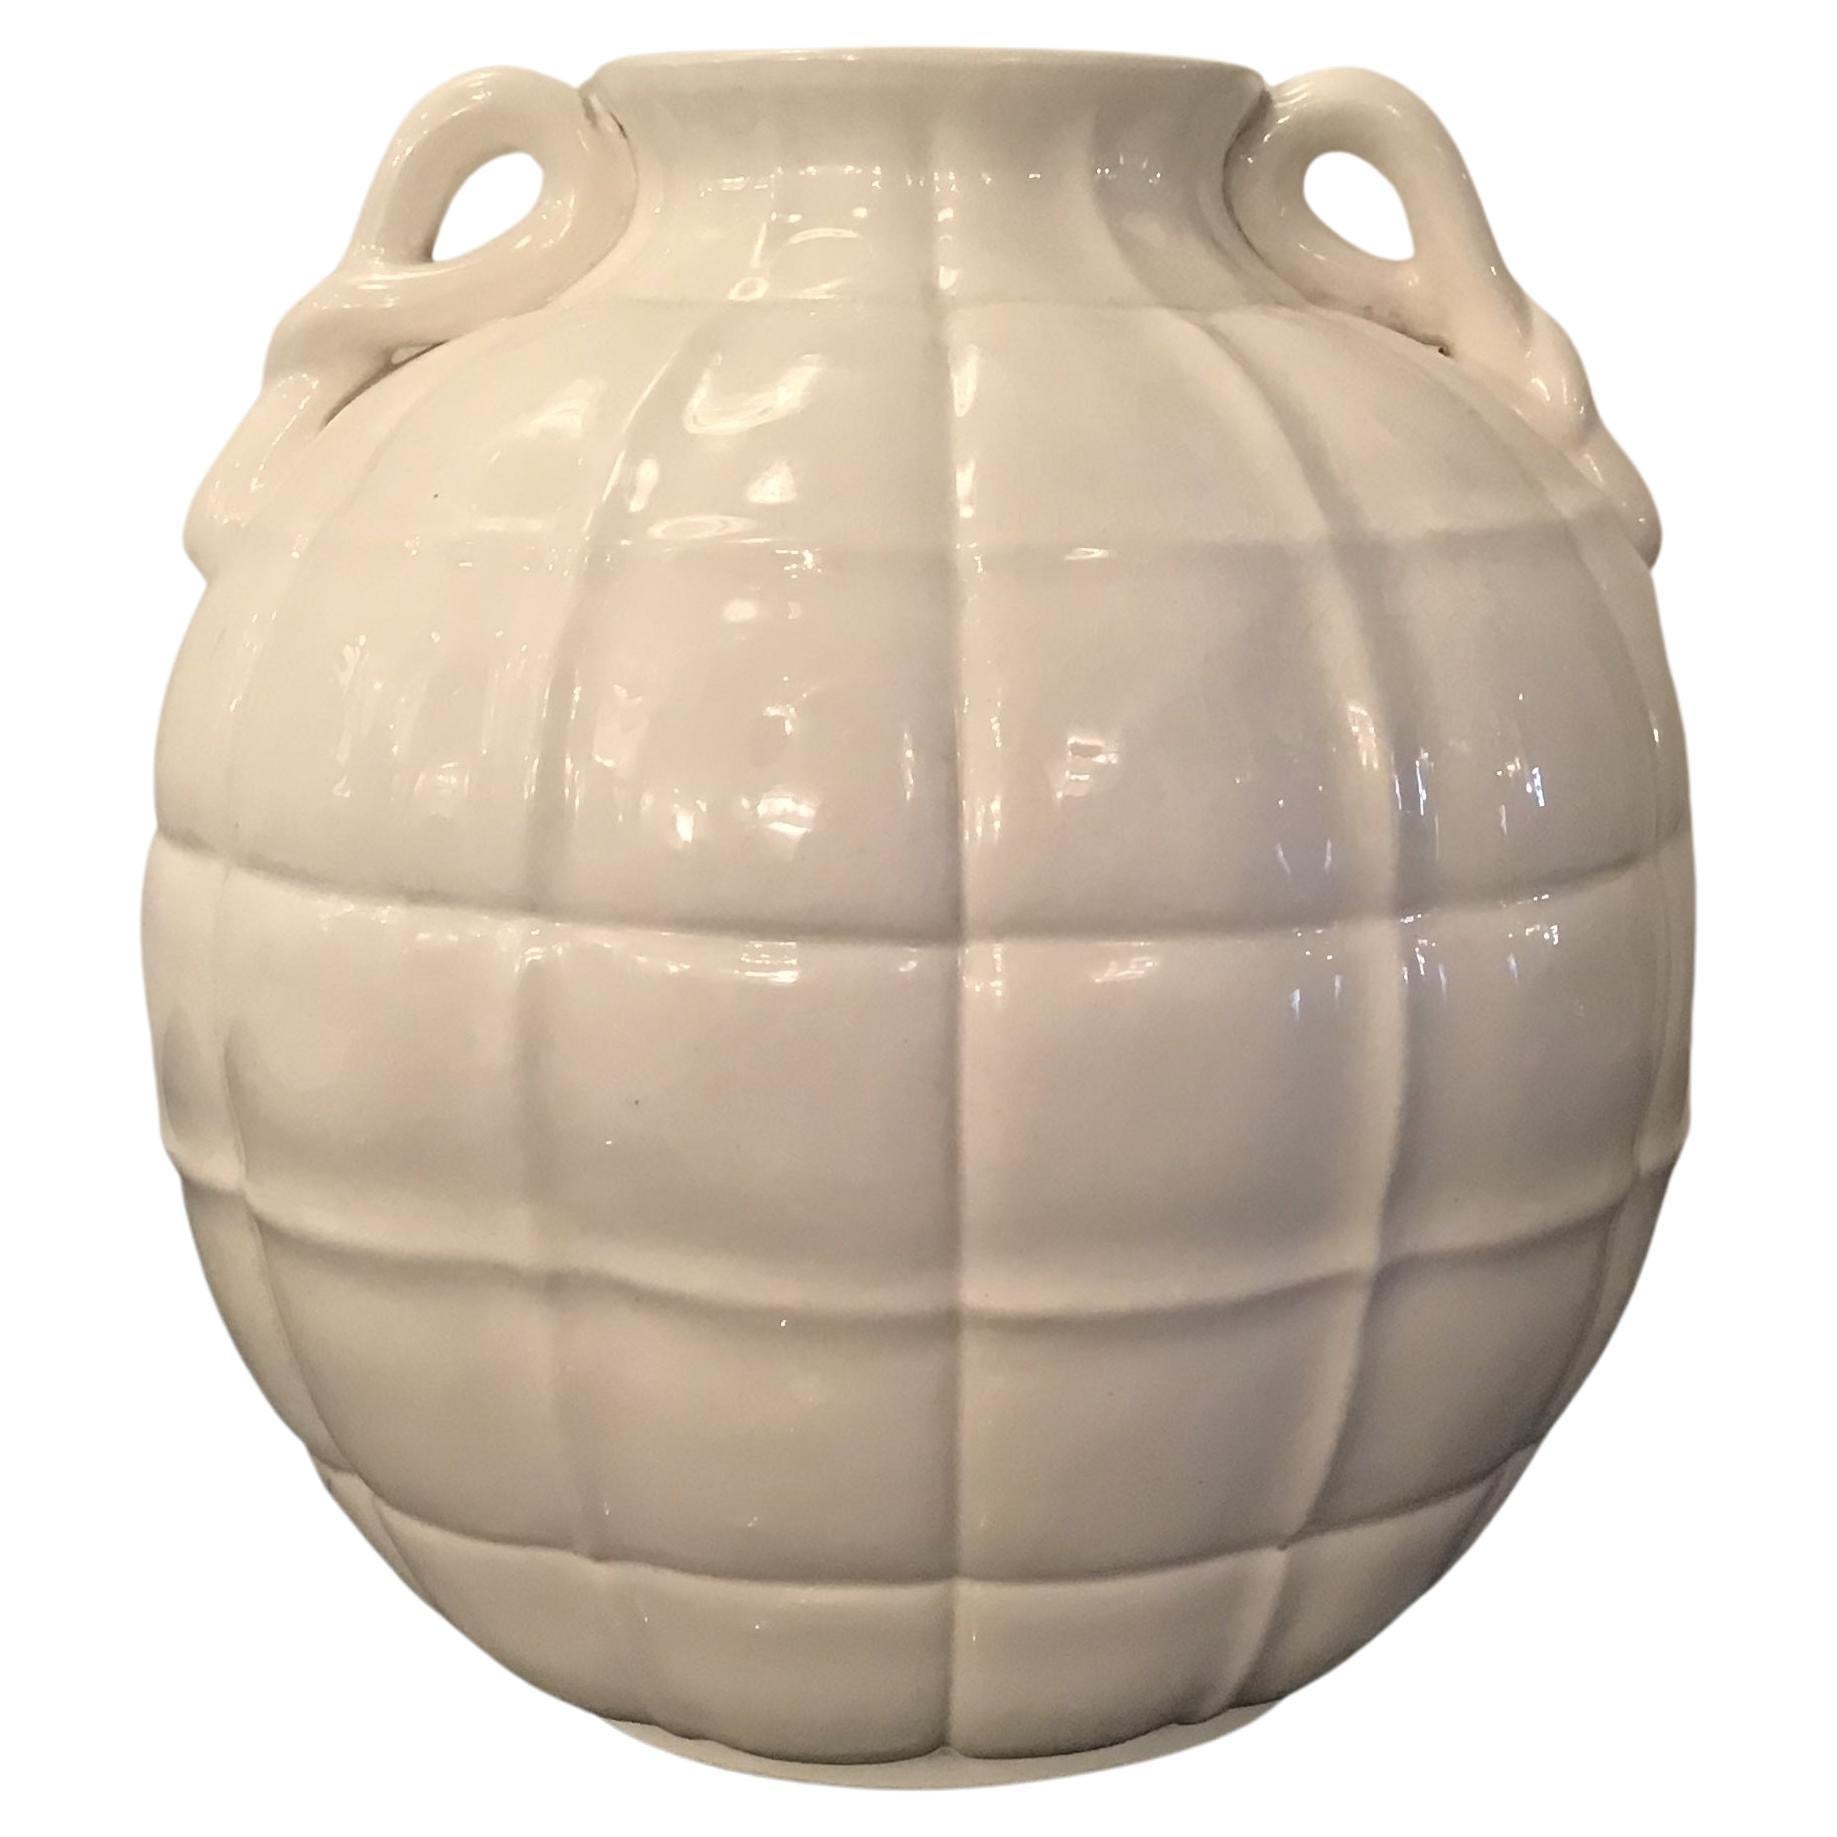 Gio’ Ponti  “ Richard Ginori” Vase Ceramic 1929 Italy  For Sale